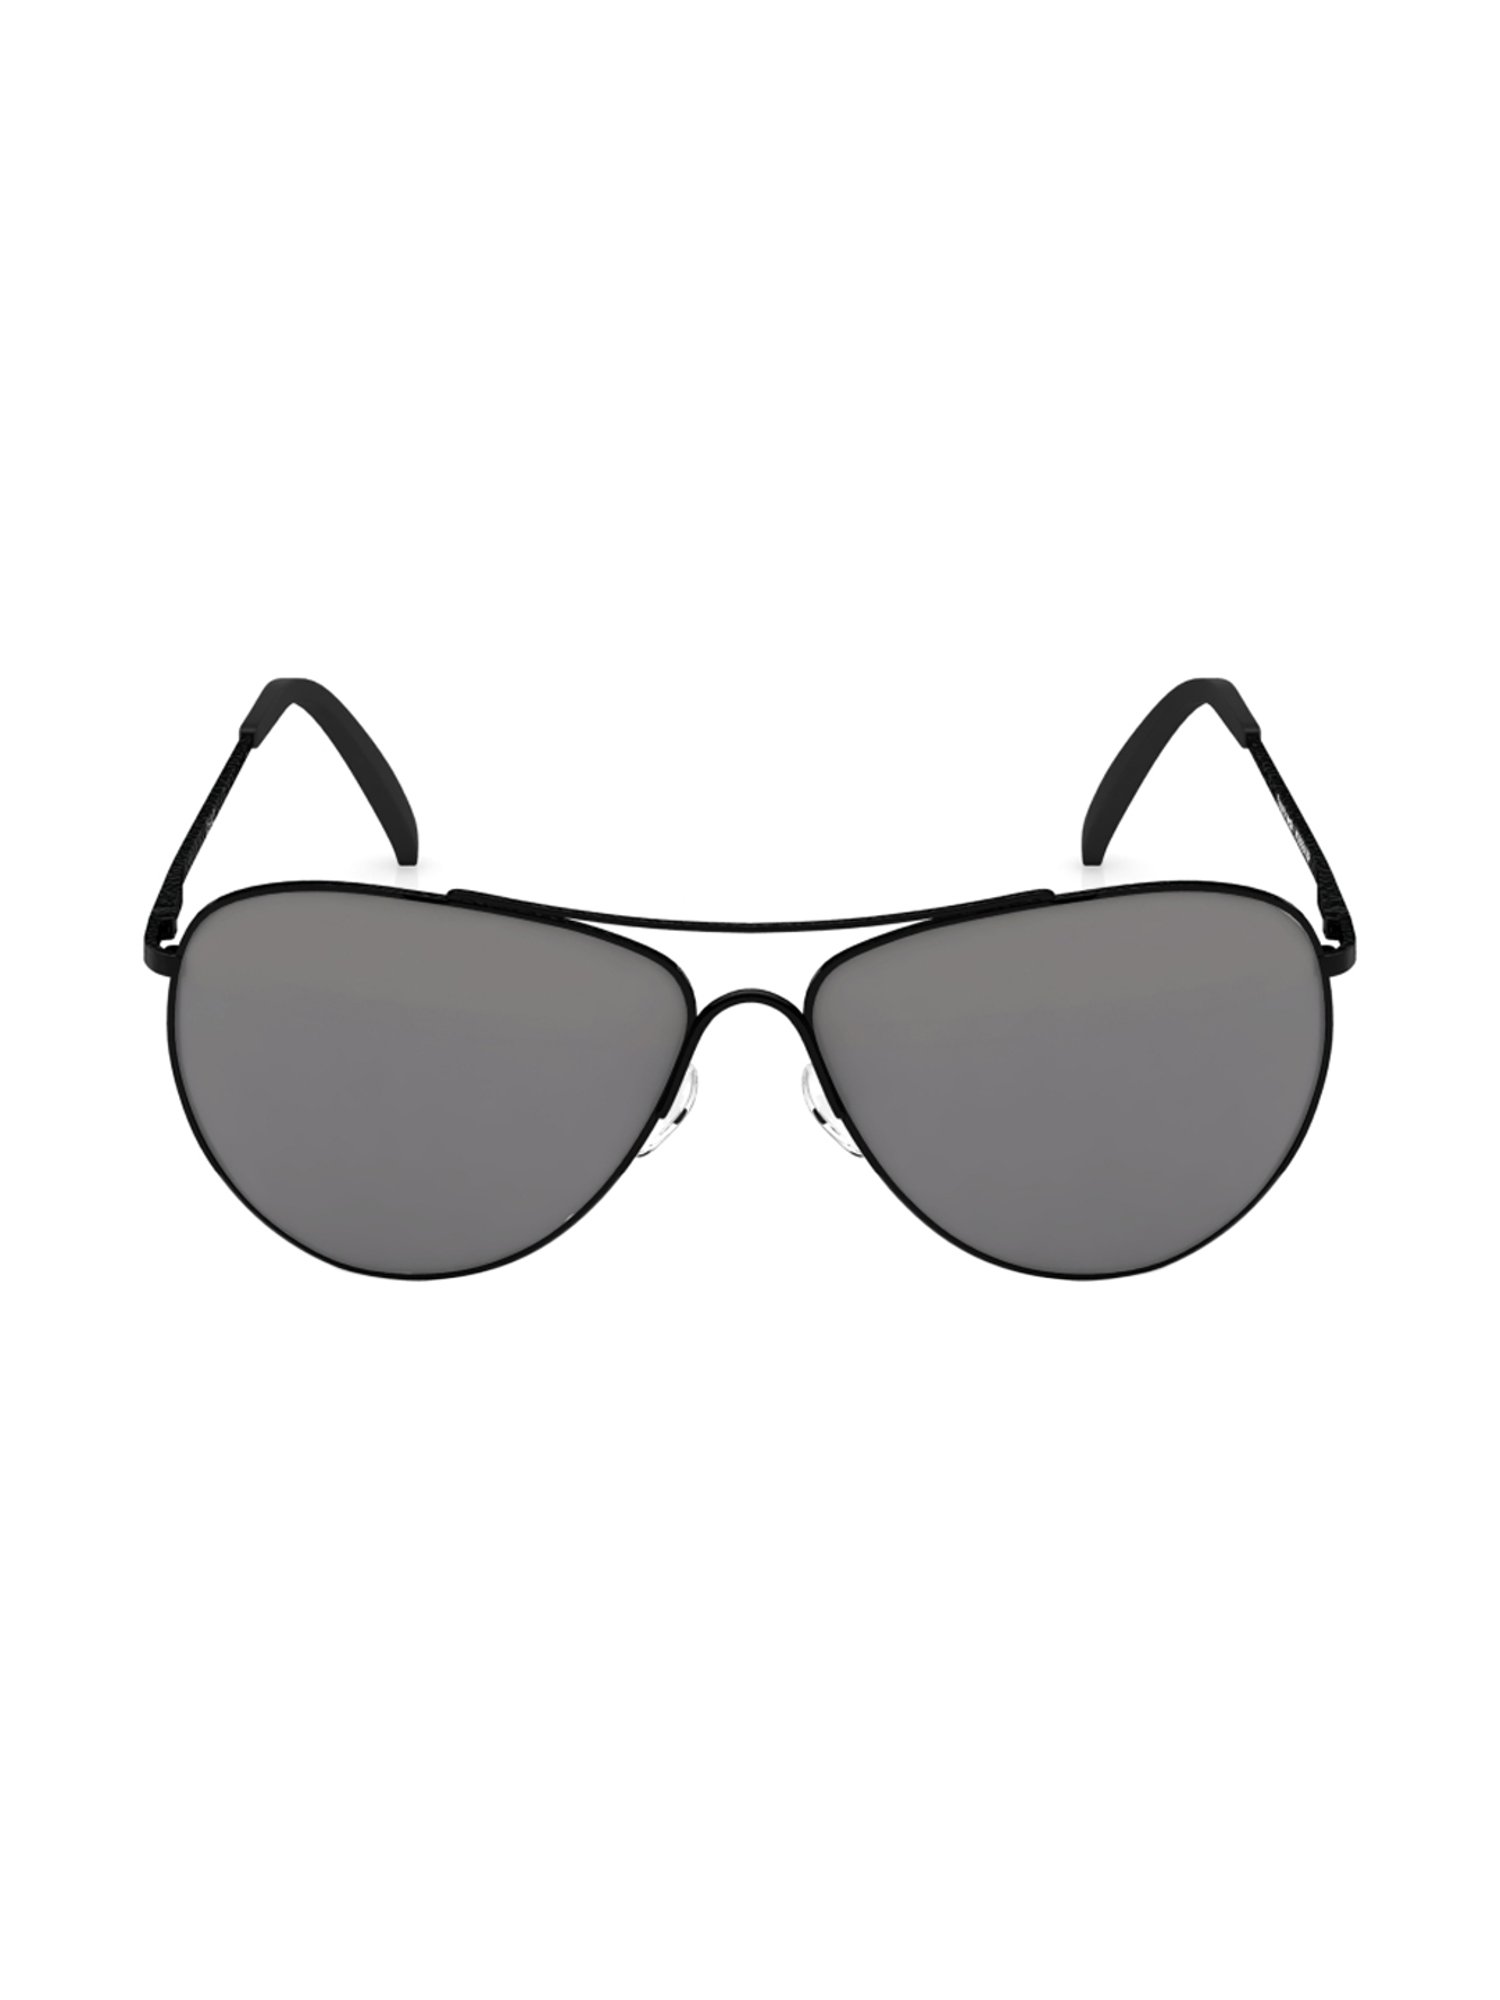 Classic Metal Aviator Sunglasses Slim Arms Straight Crossbar Mirrored -  sunglass.la